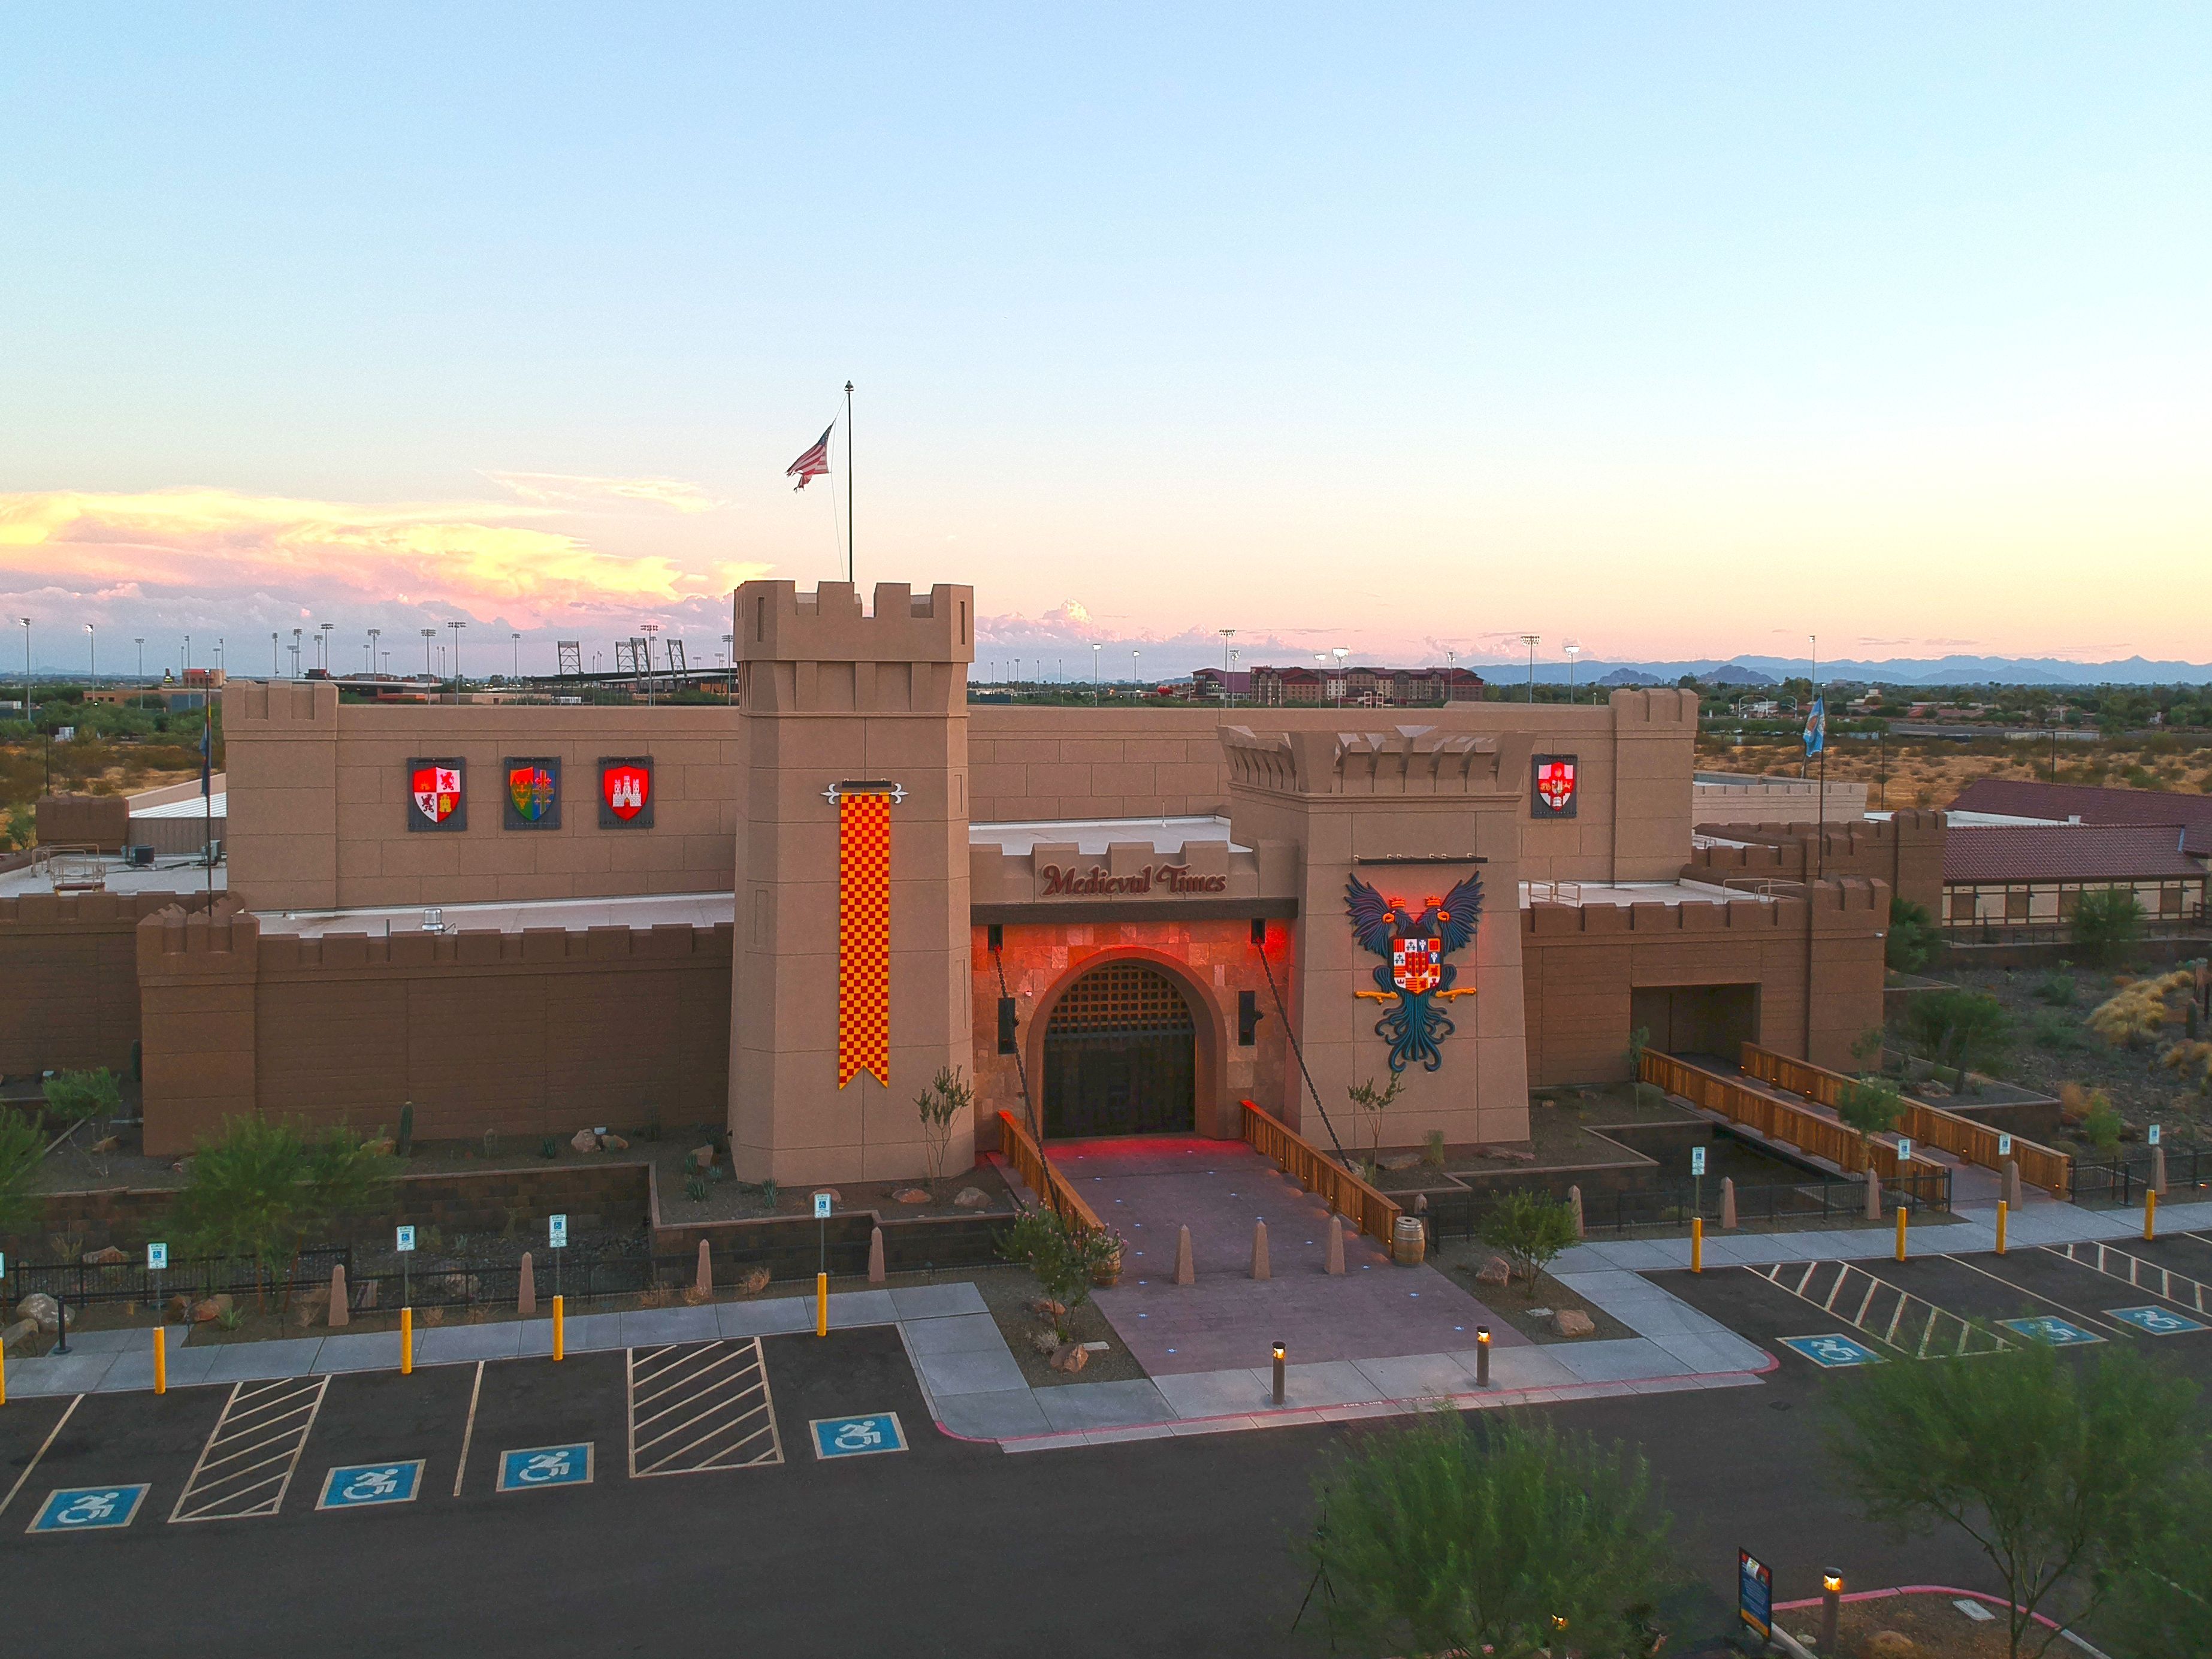 Medieval Times Dinner & Tournament - Scottsdale AZ, 85258